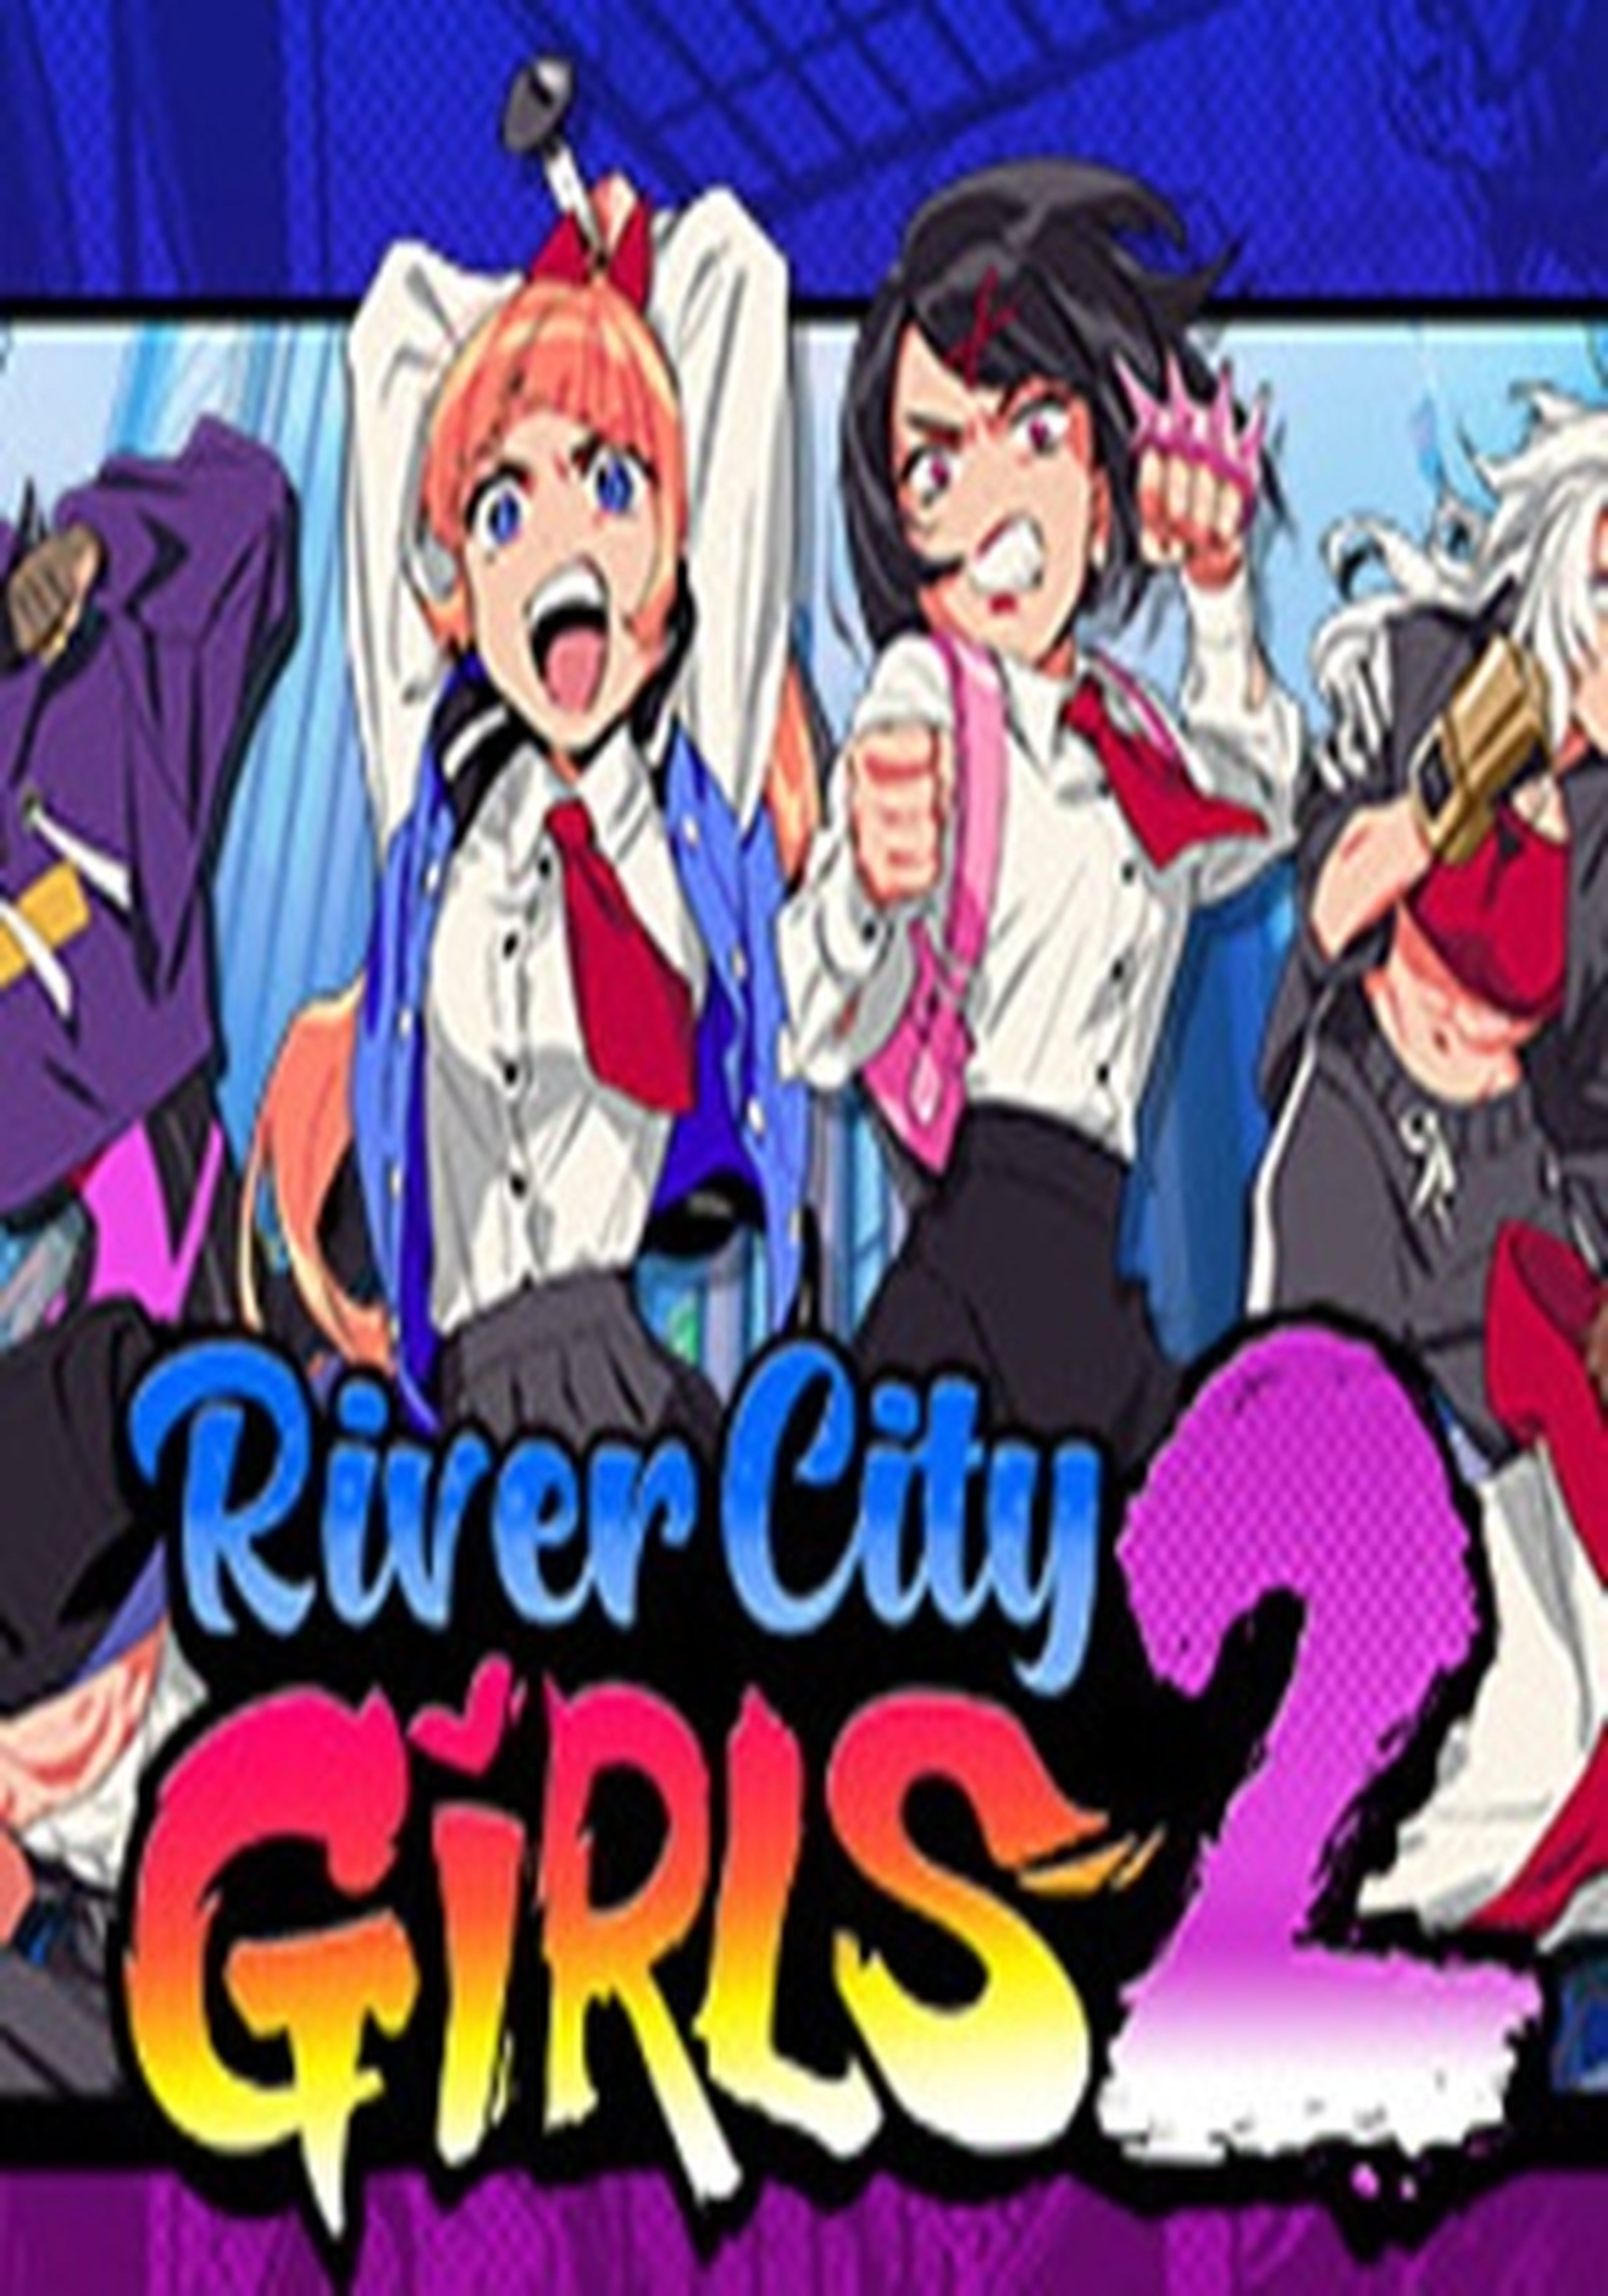 River City Girls 2 cartel